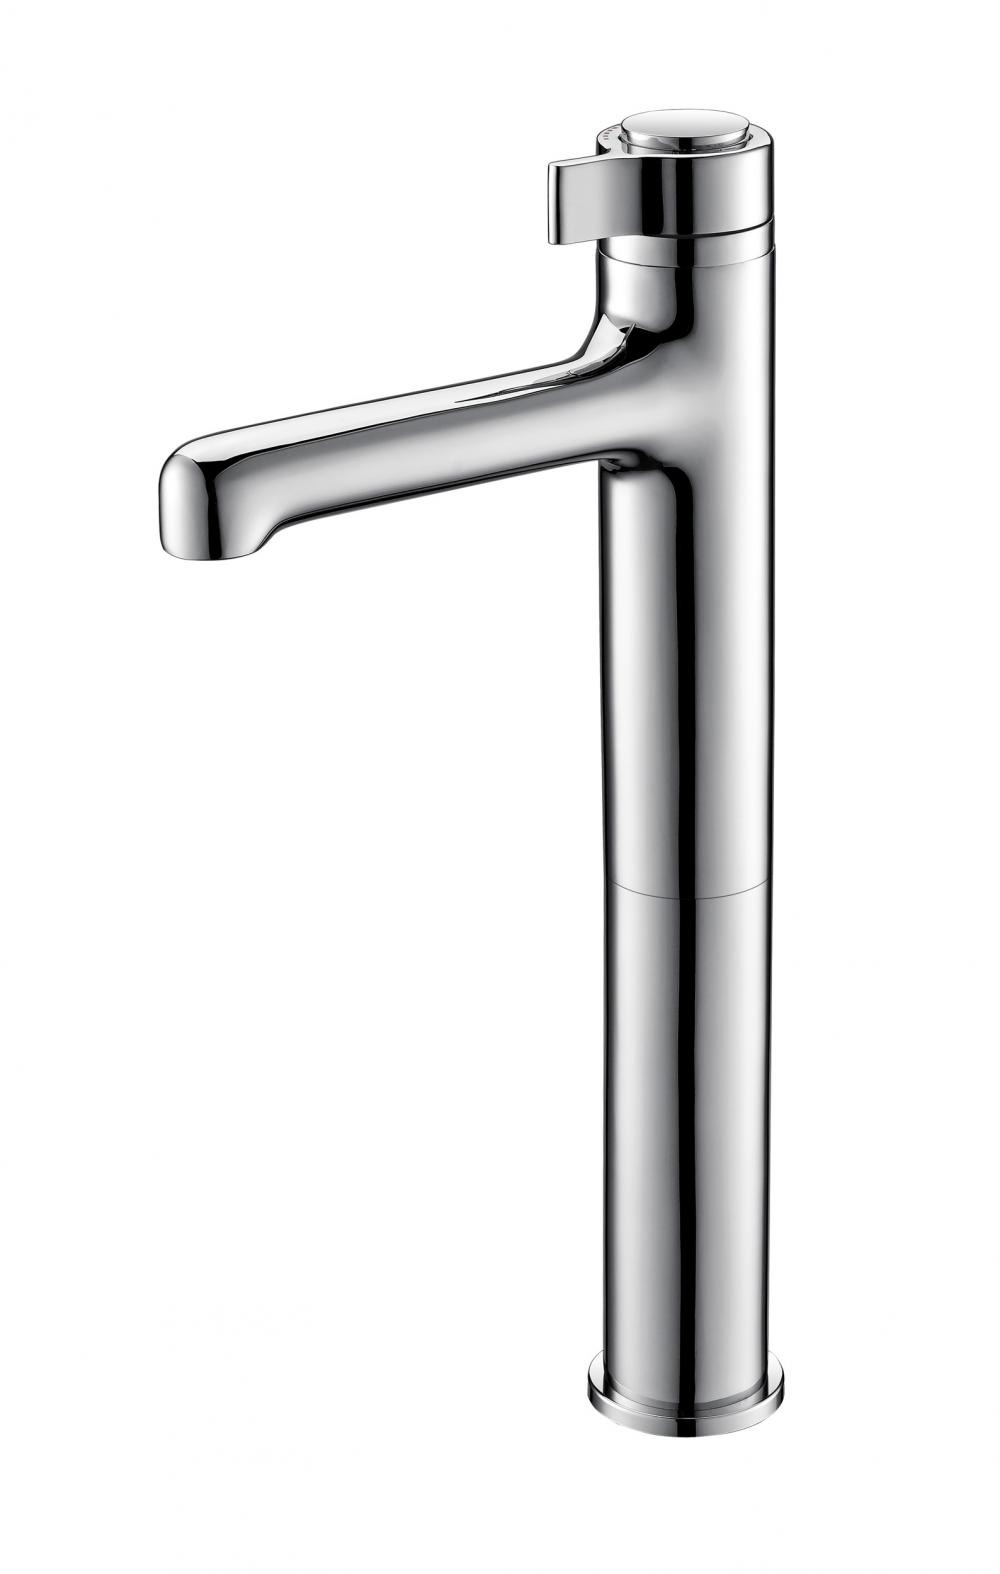 Fregadera del grifo de cuerpo alto Taífer de lavabo moderno